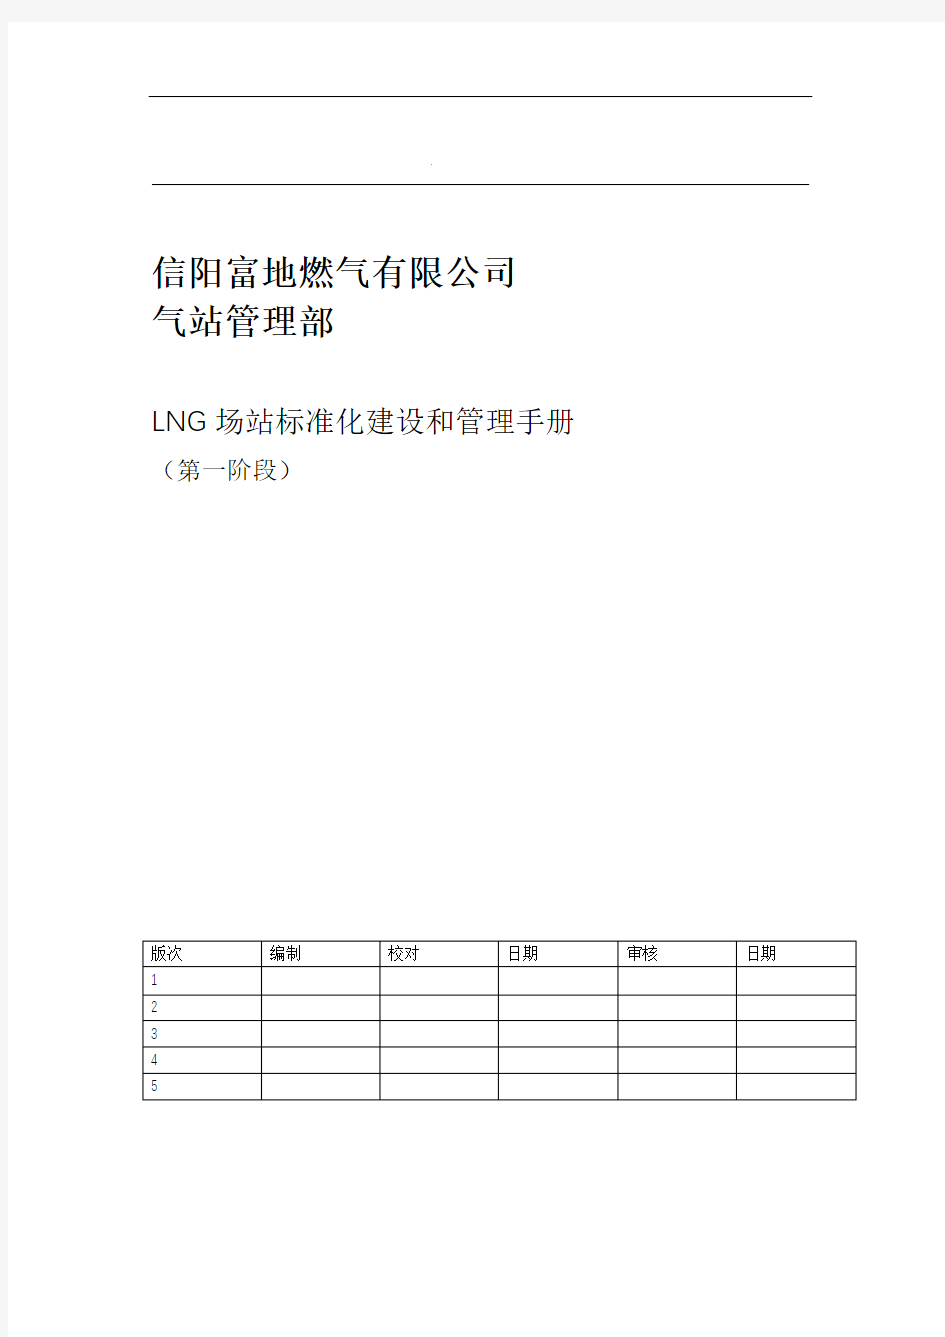 LNG场站标准化建设和管理手册